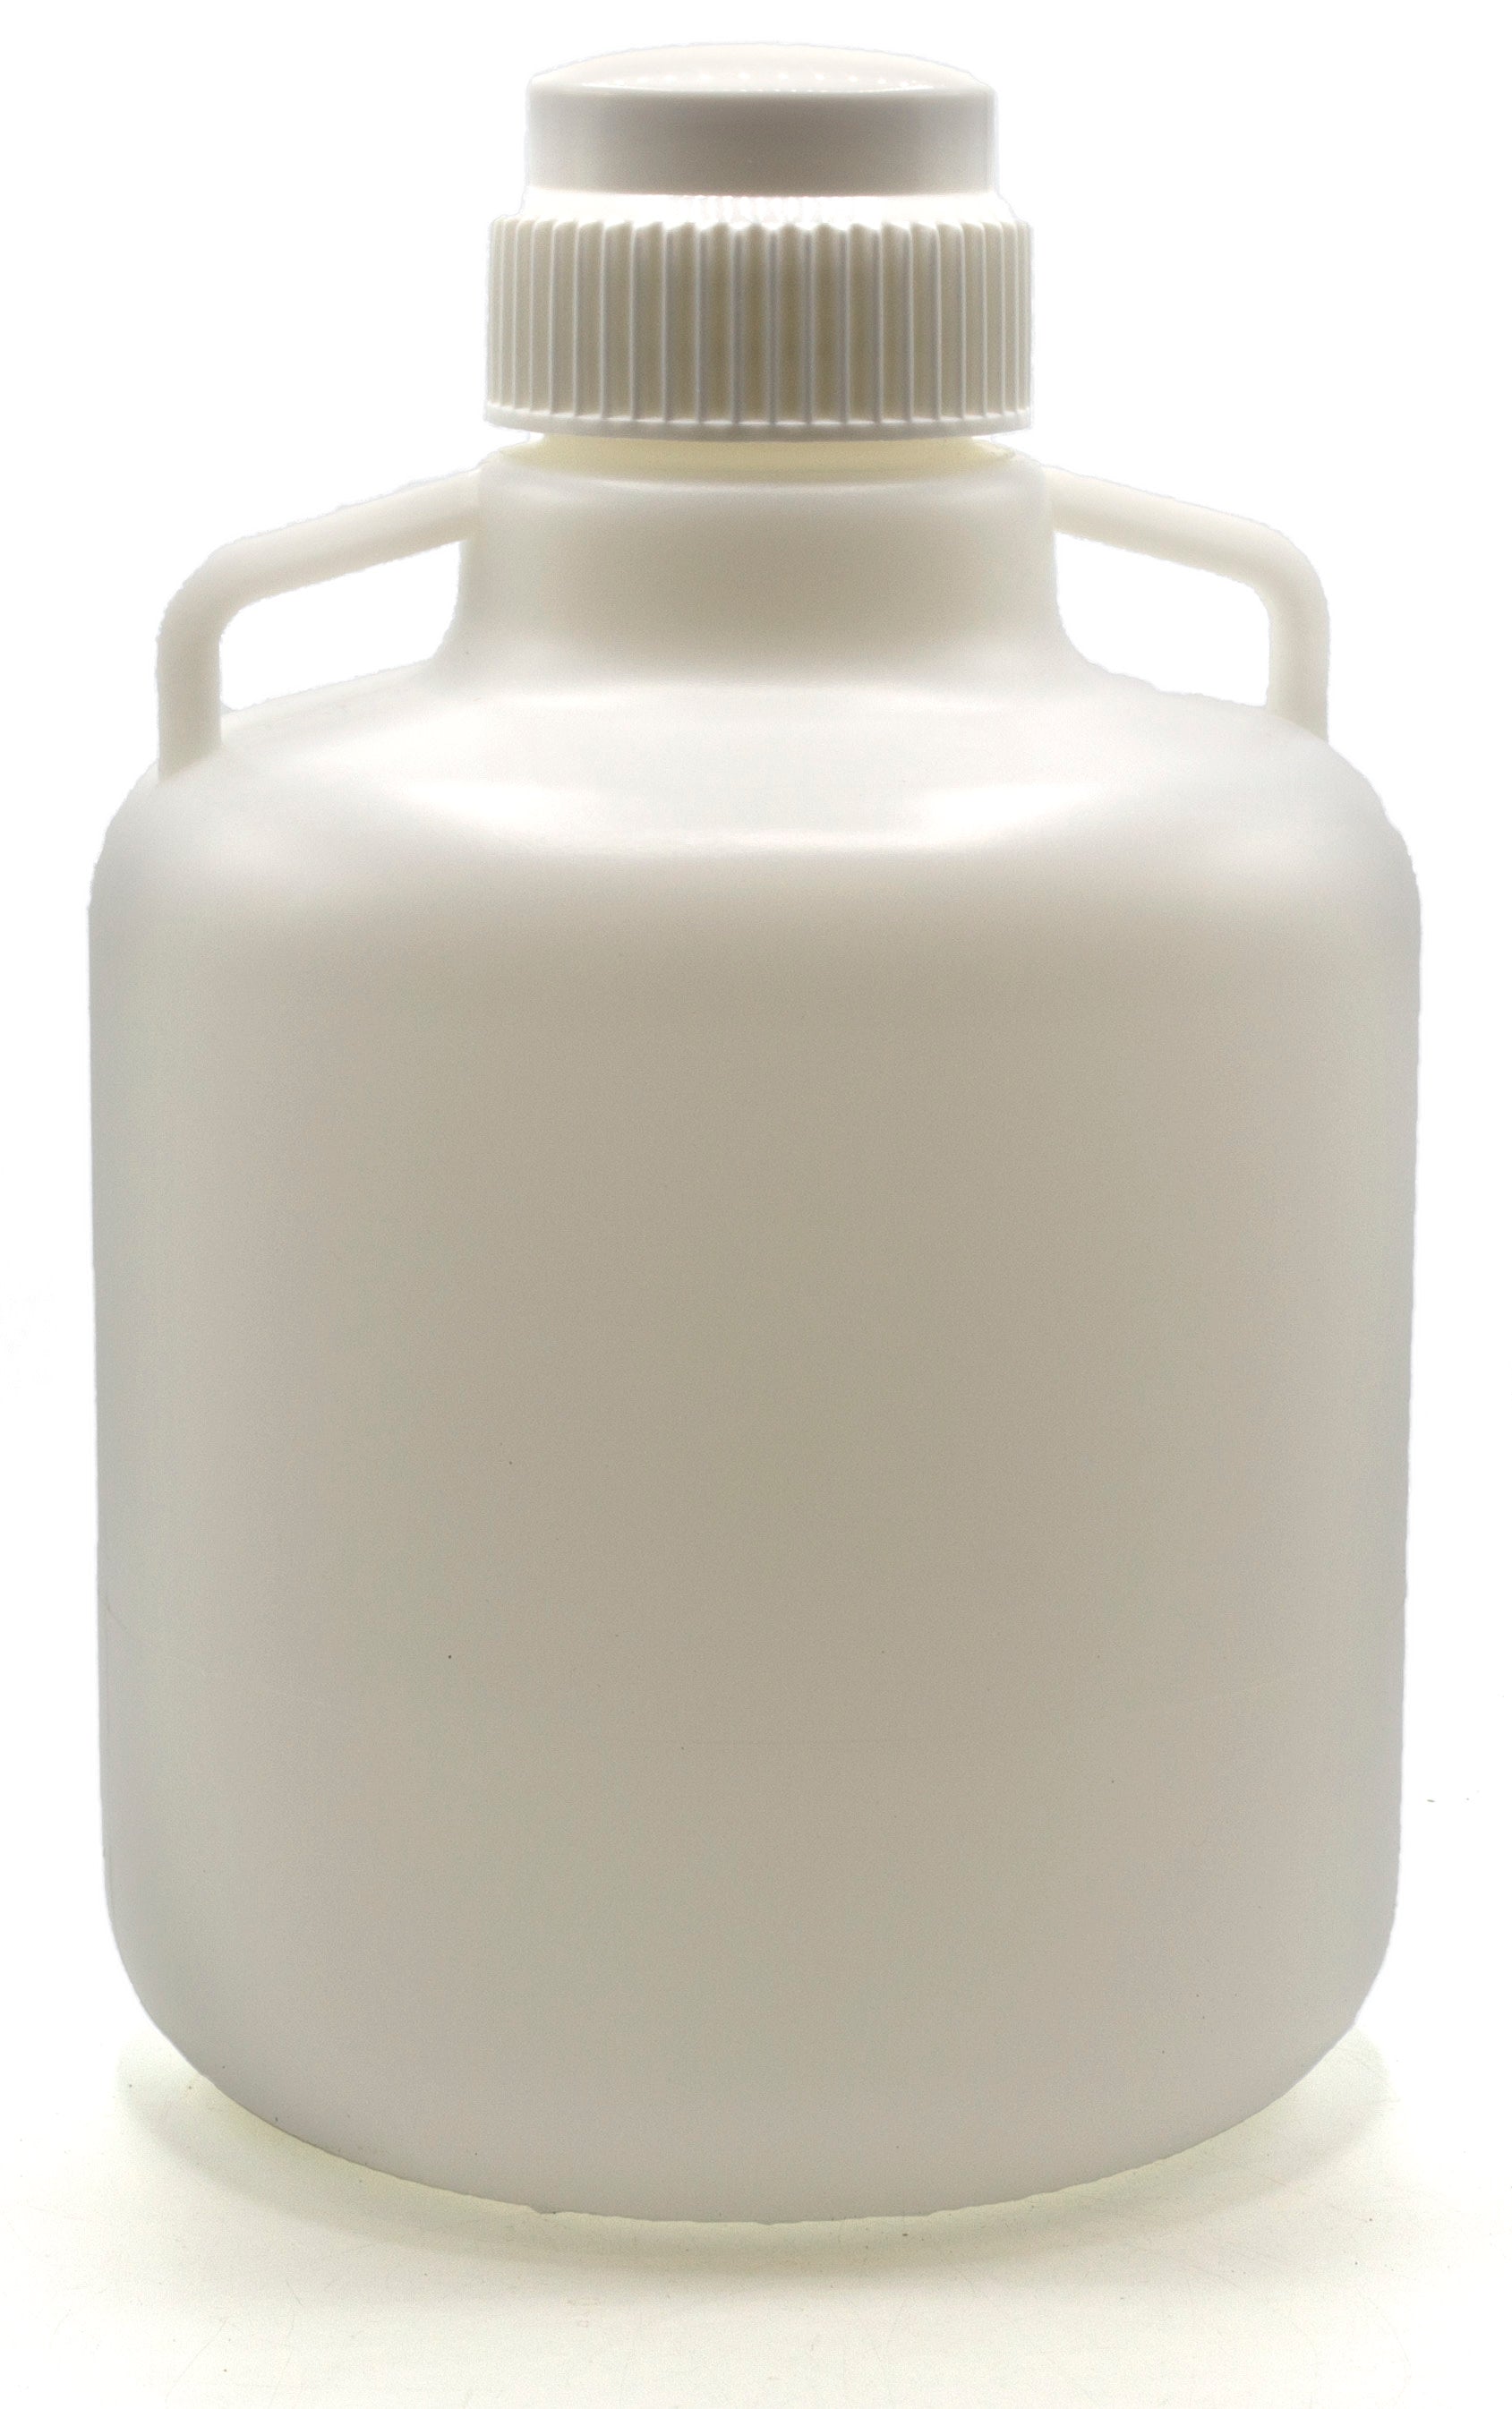 White Polypropylene Carboy with Gasket Cap, 10 Liter